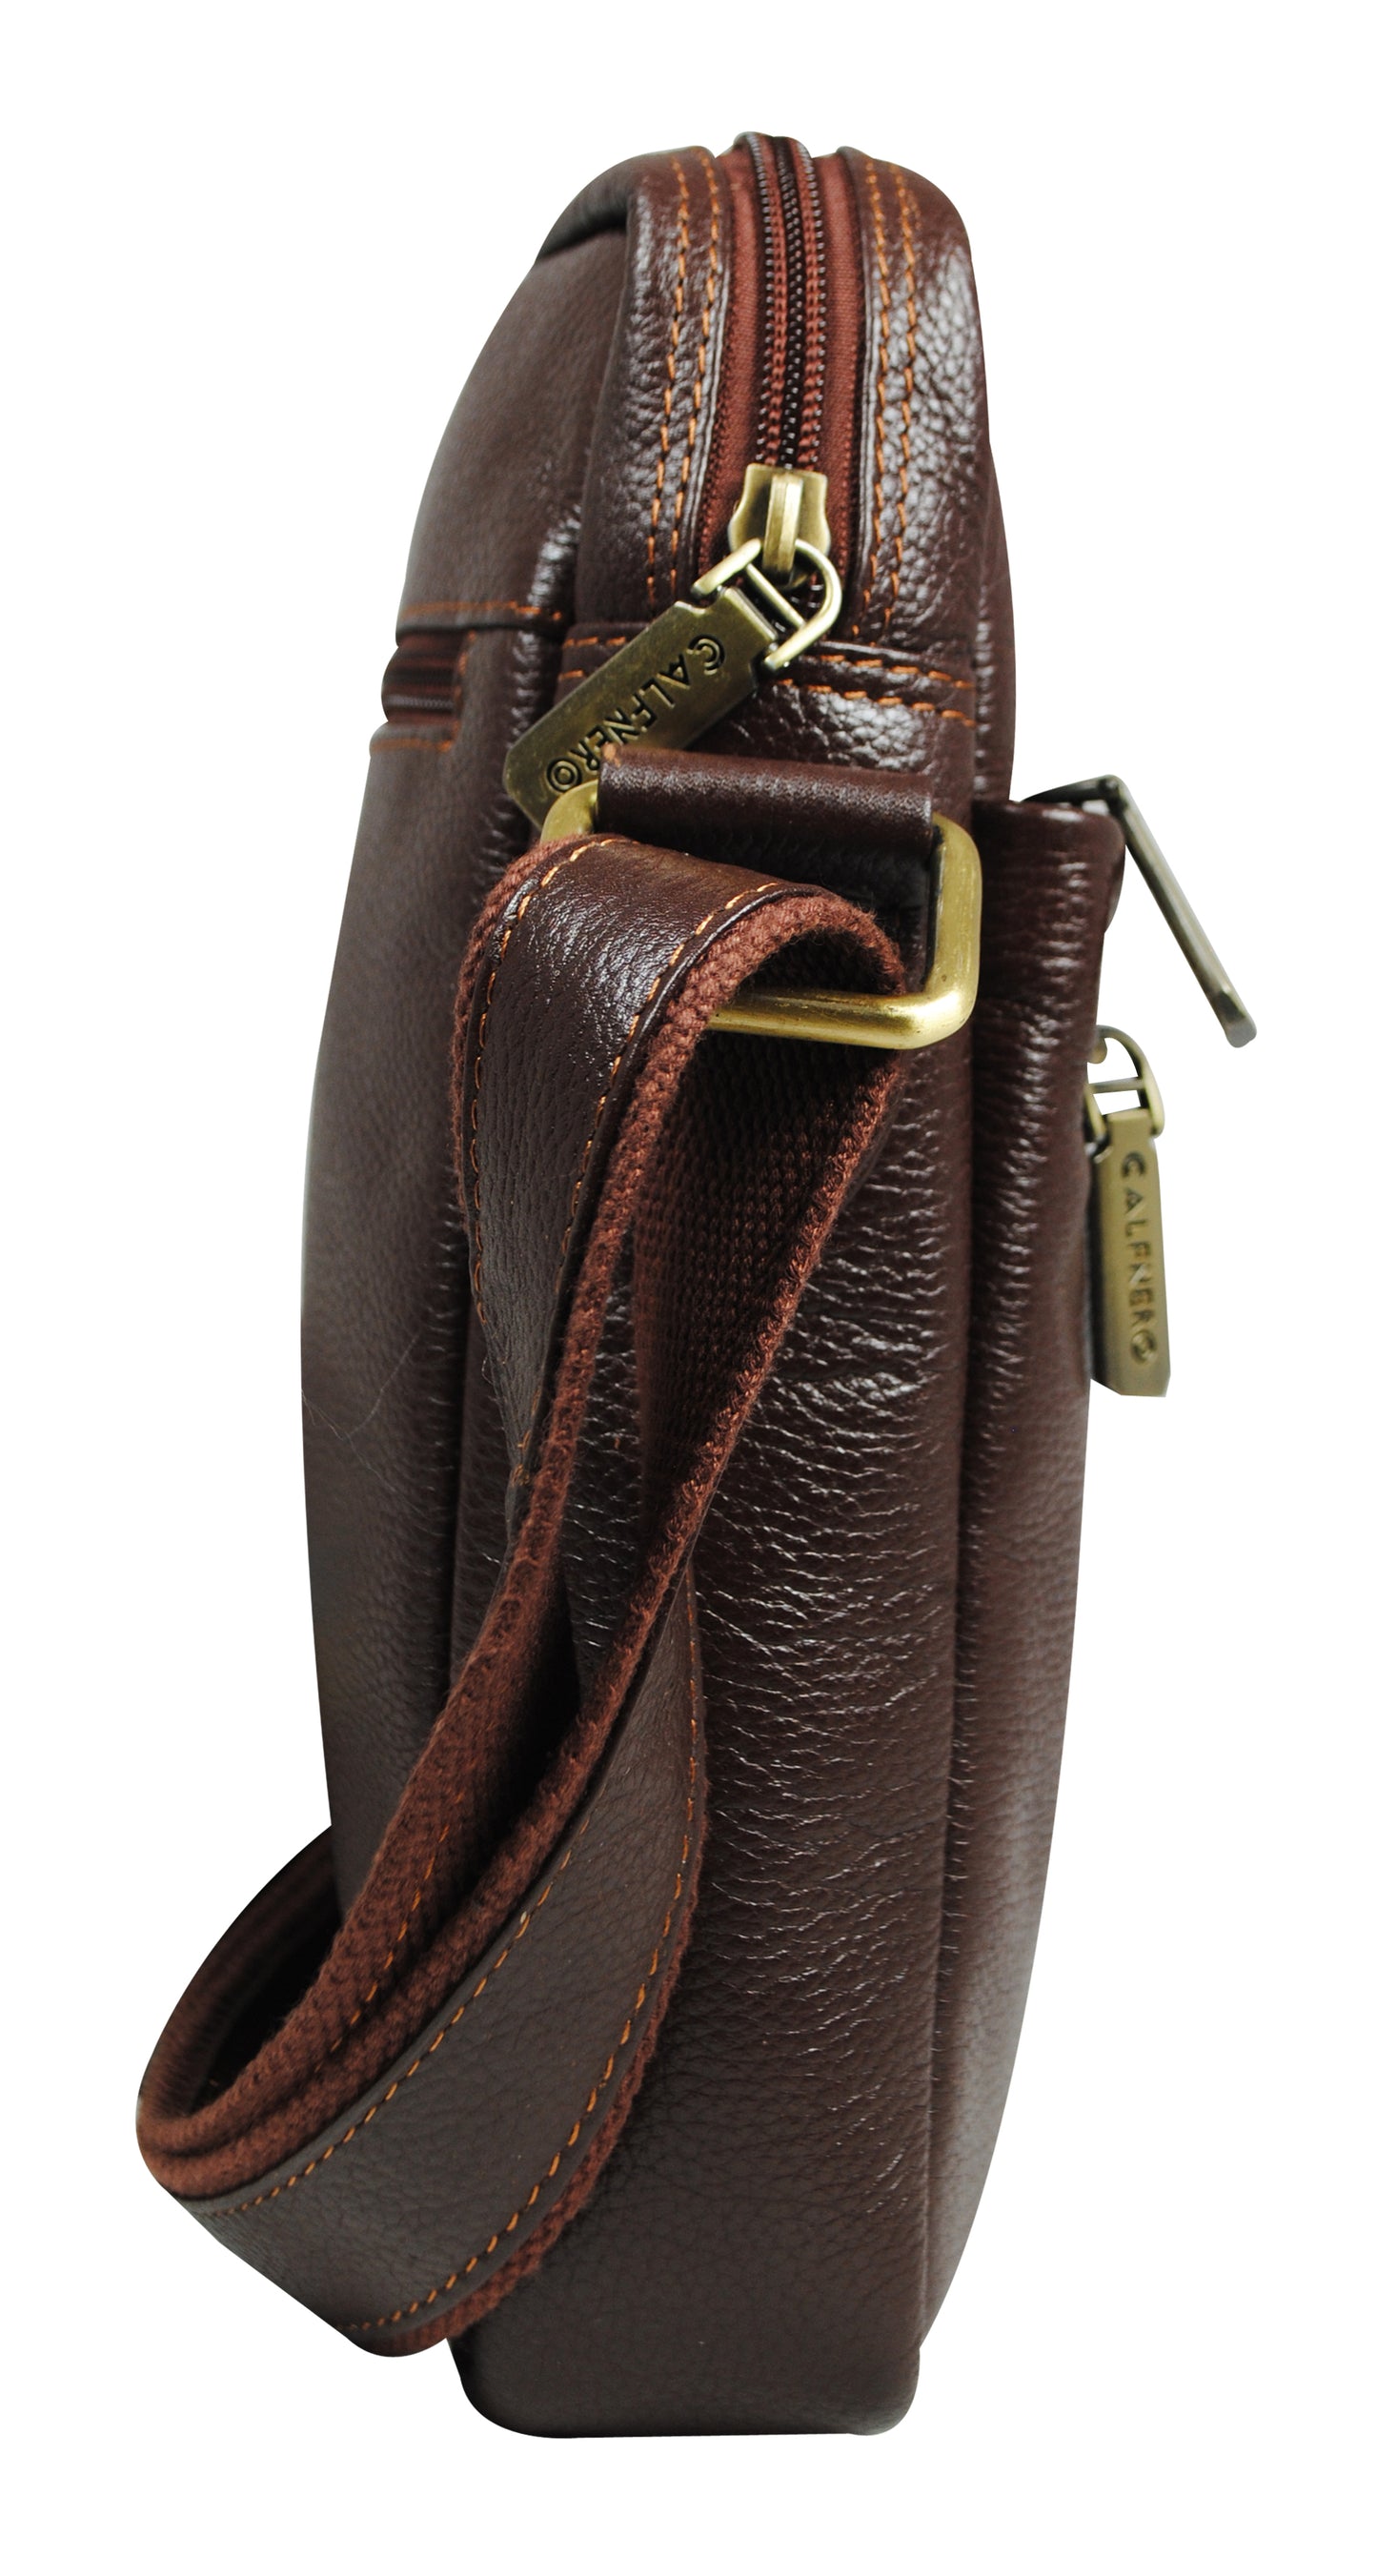 Calfnero Genuine Leather Men's Cross Body Bag (CH-15-Brown)